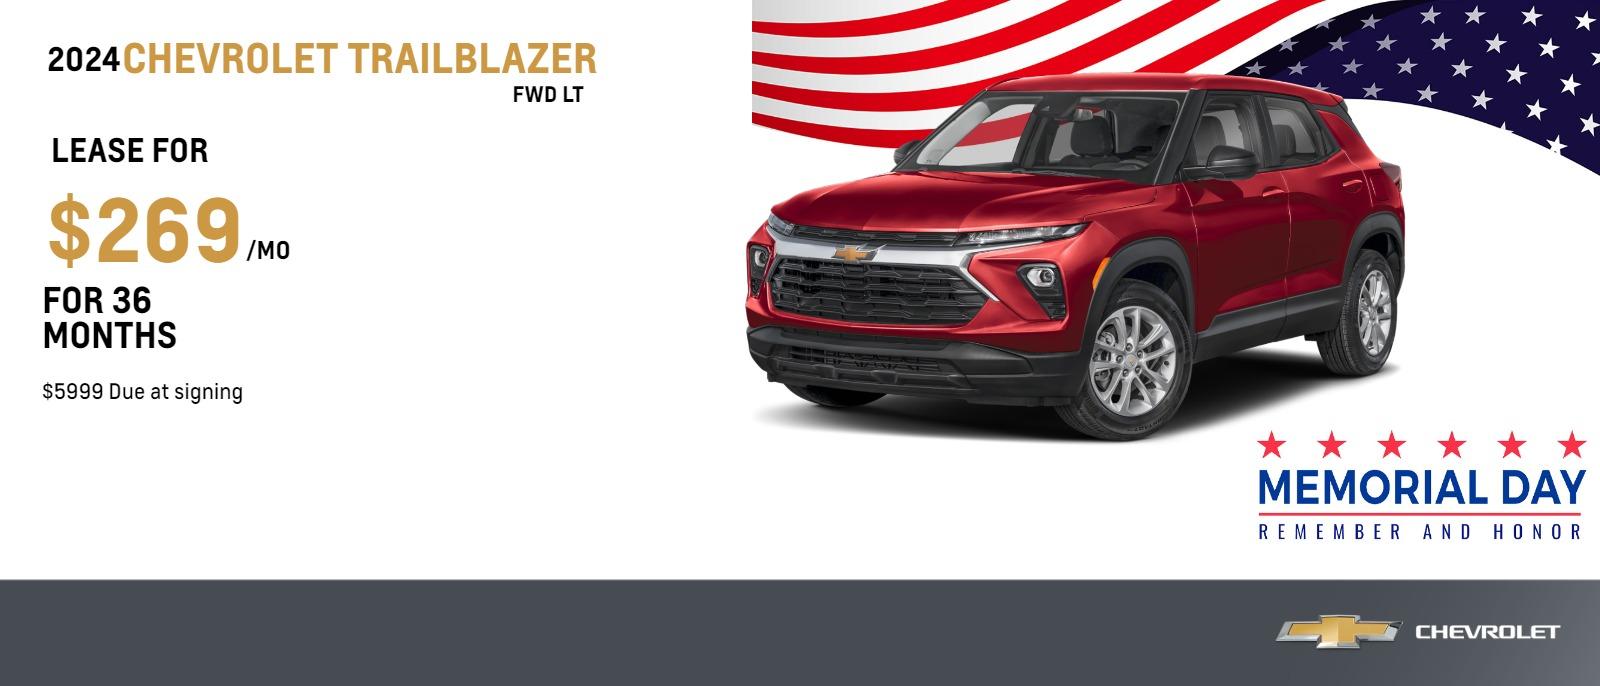 2024 Chevrolet Trailblazer FWD LT
$269 Month Lease | 36 Months | $5999 Due at signing